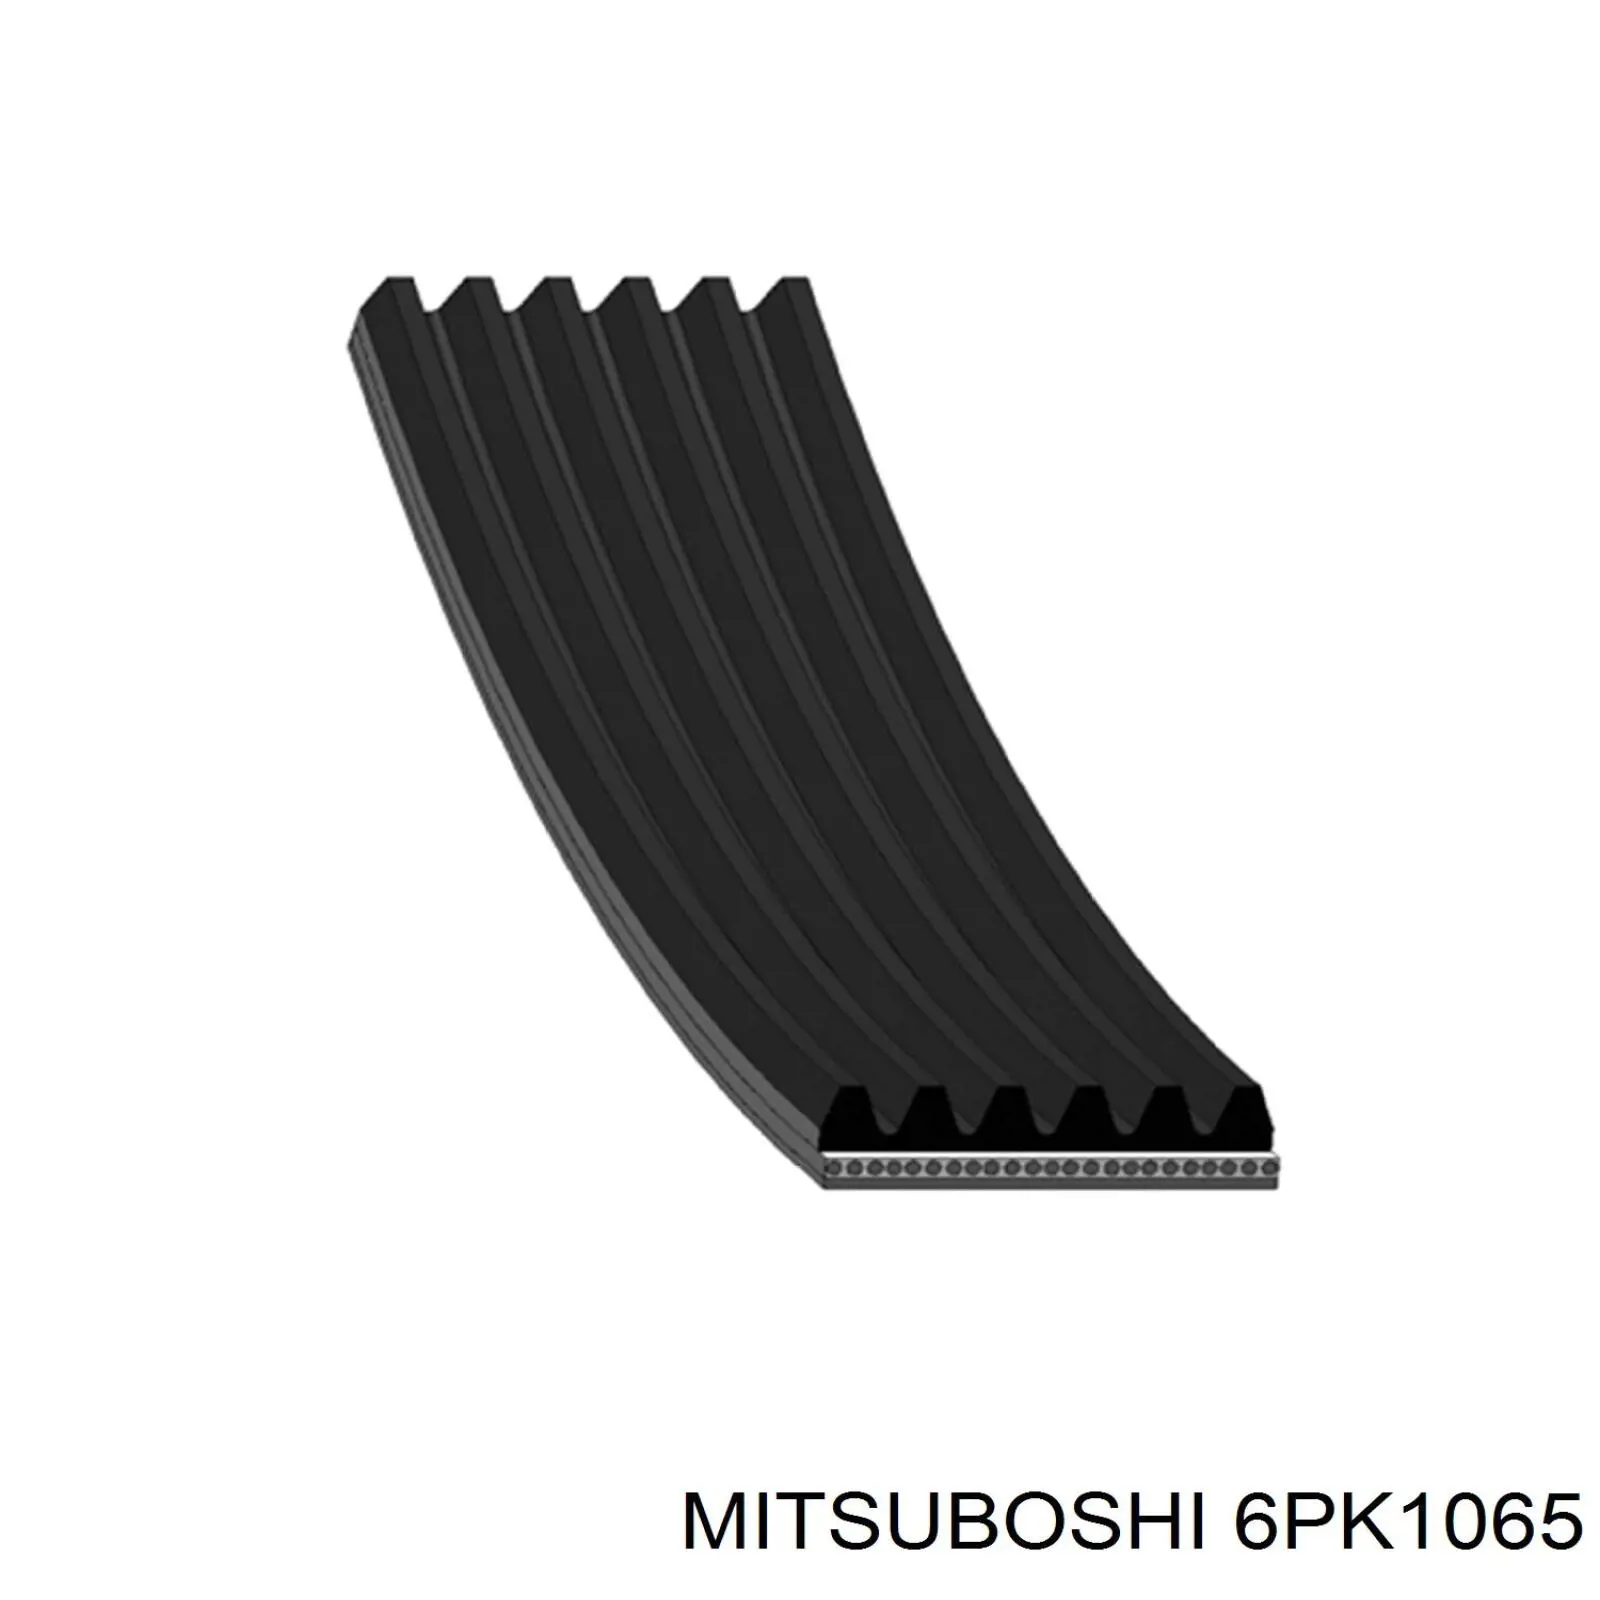 6PK1065 Mitsuboshi ремень генератора